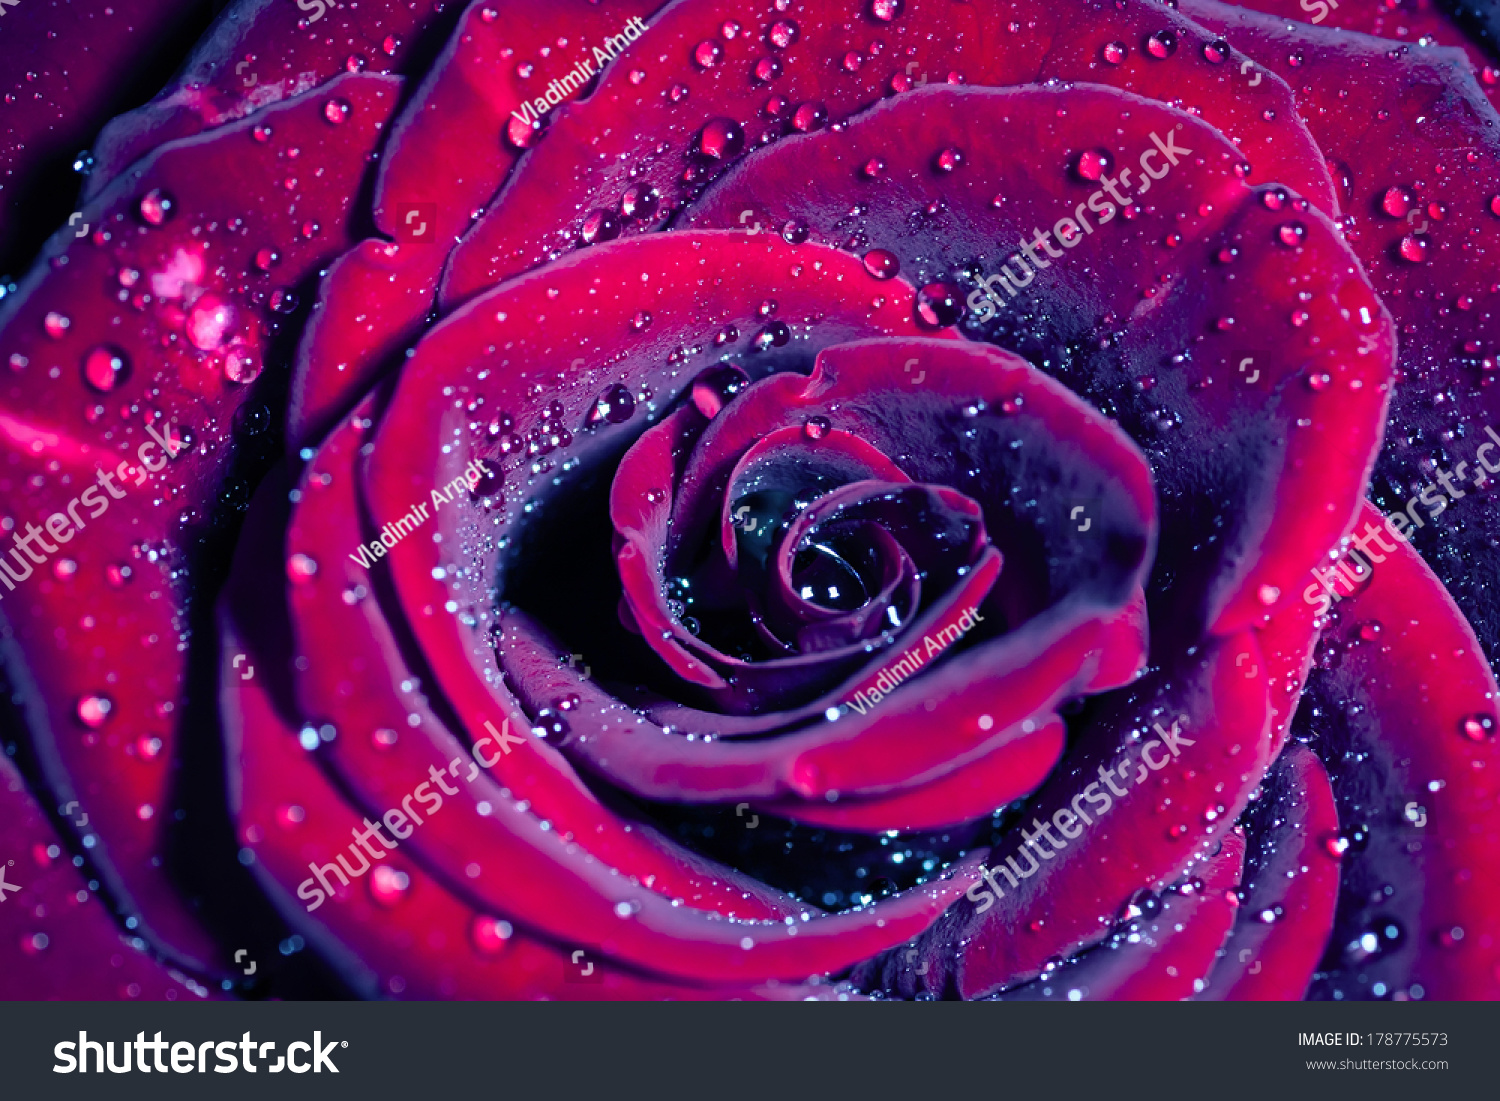 خلفيات ملونه فلاشيه Stock-photo-rose-with-water-drops-macro-shot-with-shallow-depth-of-field-color-toned-image-178775573